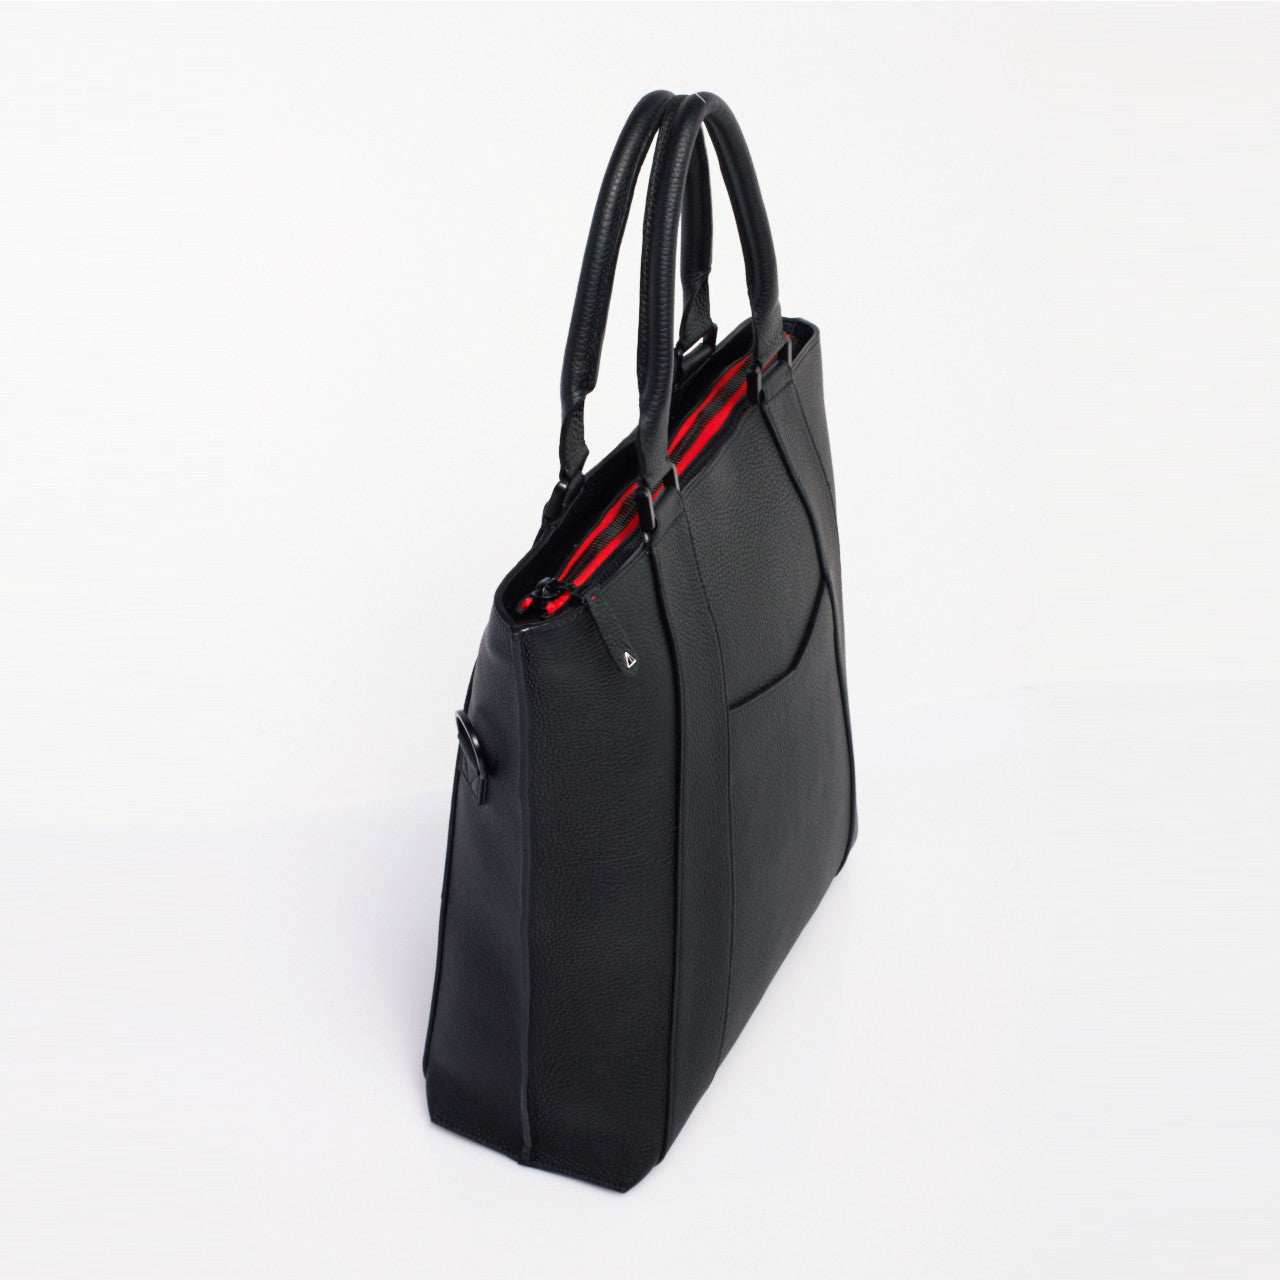 Luxury Tote Bag | Suede | Gray